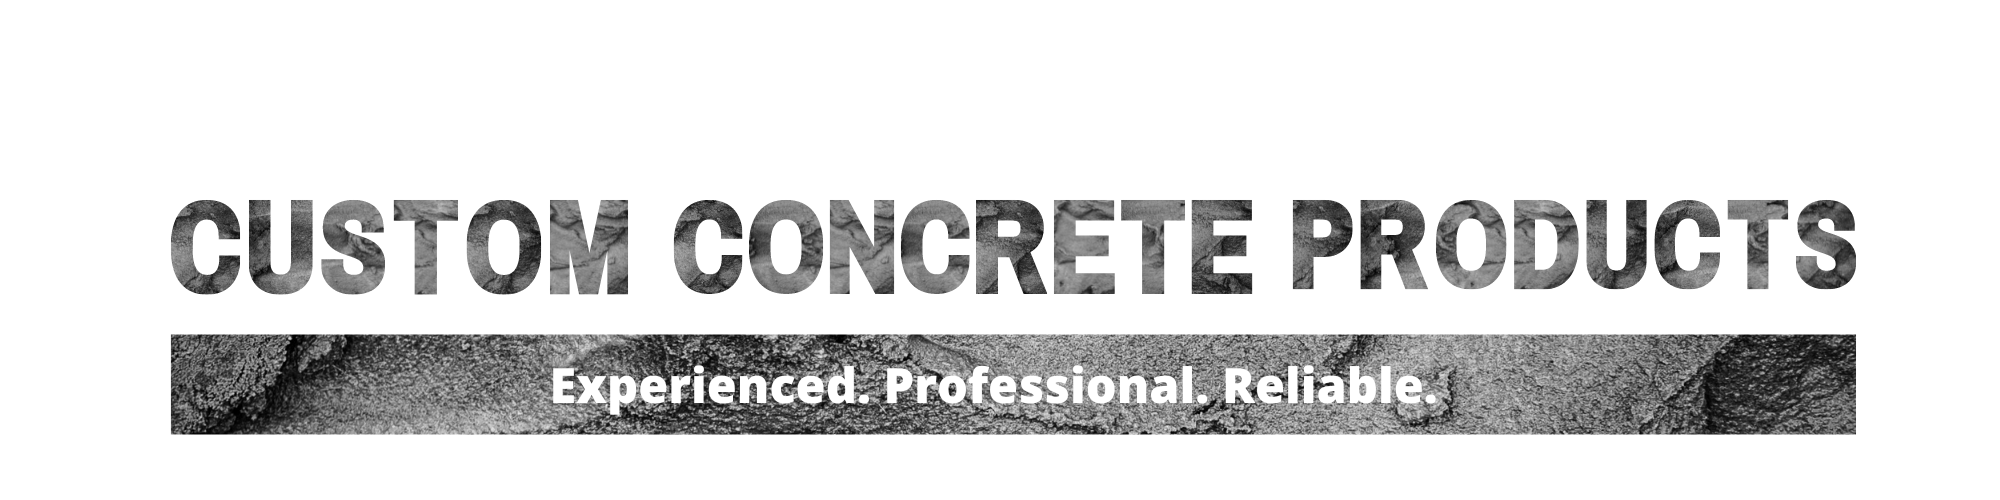 custom concrete products